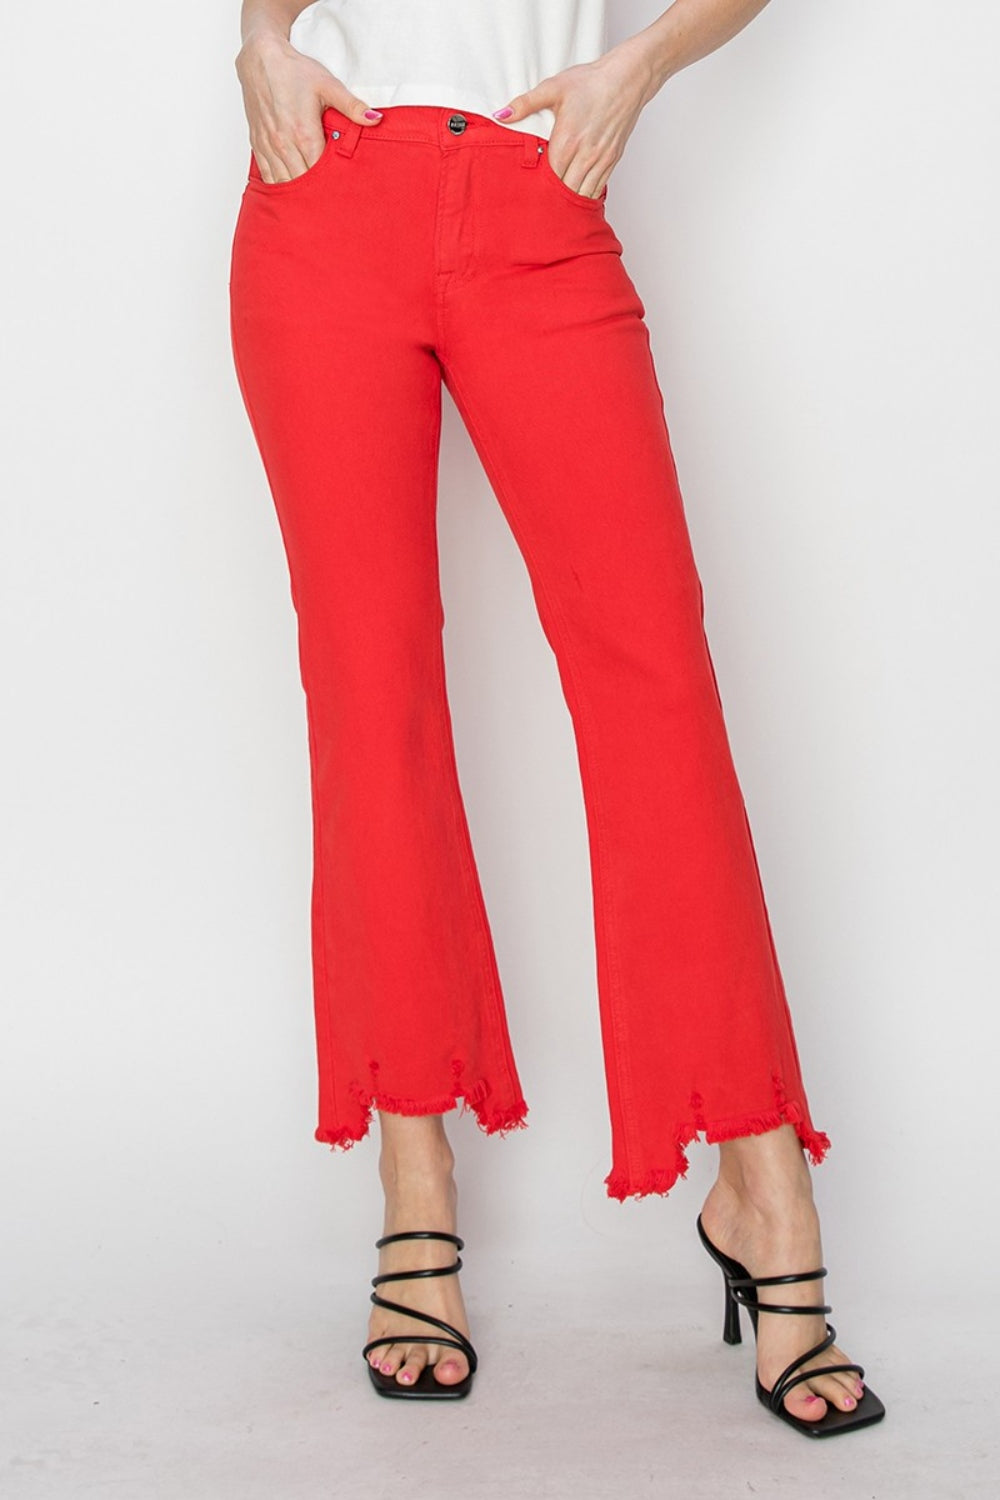 RISEN Red Straight Leg Jeans - Inspired Eye Boutique